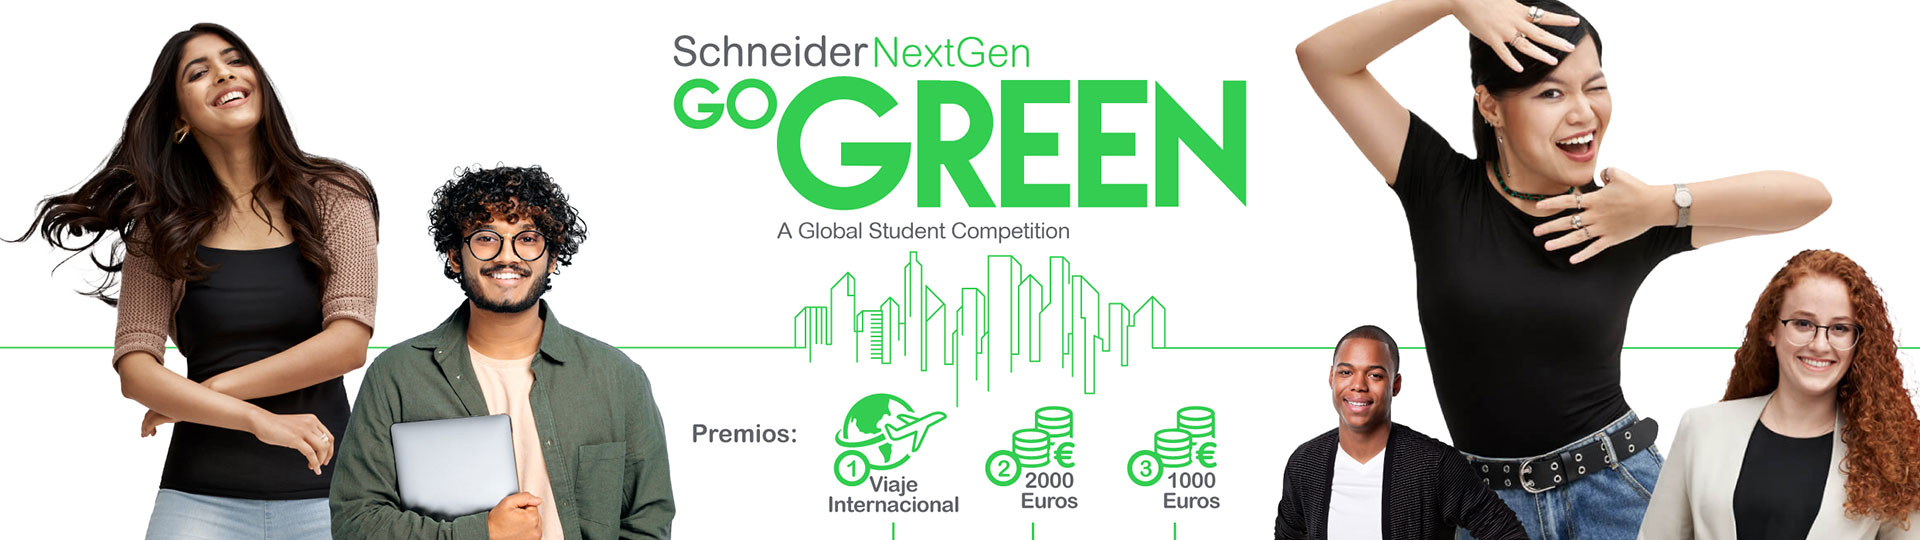 Go green next generation banner